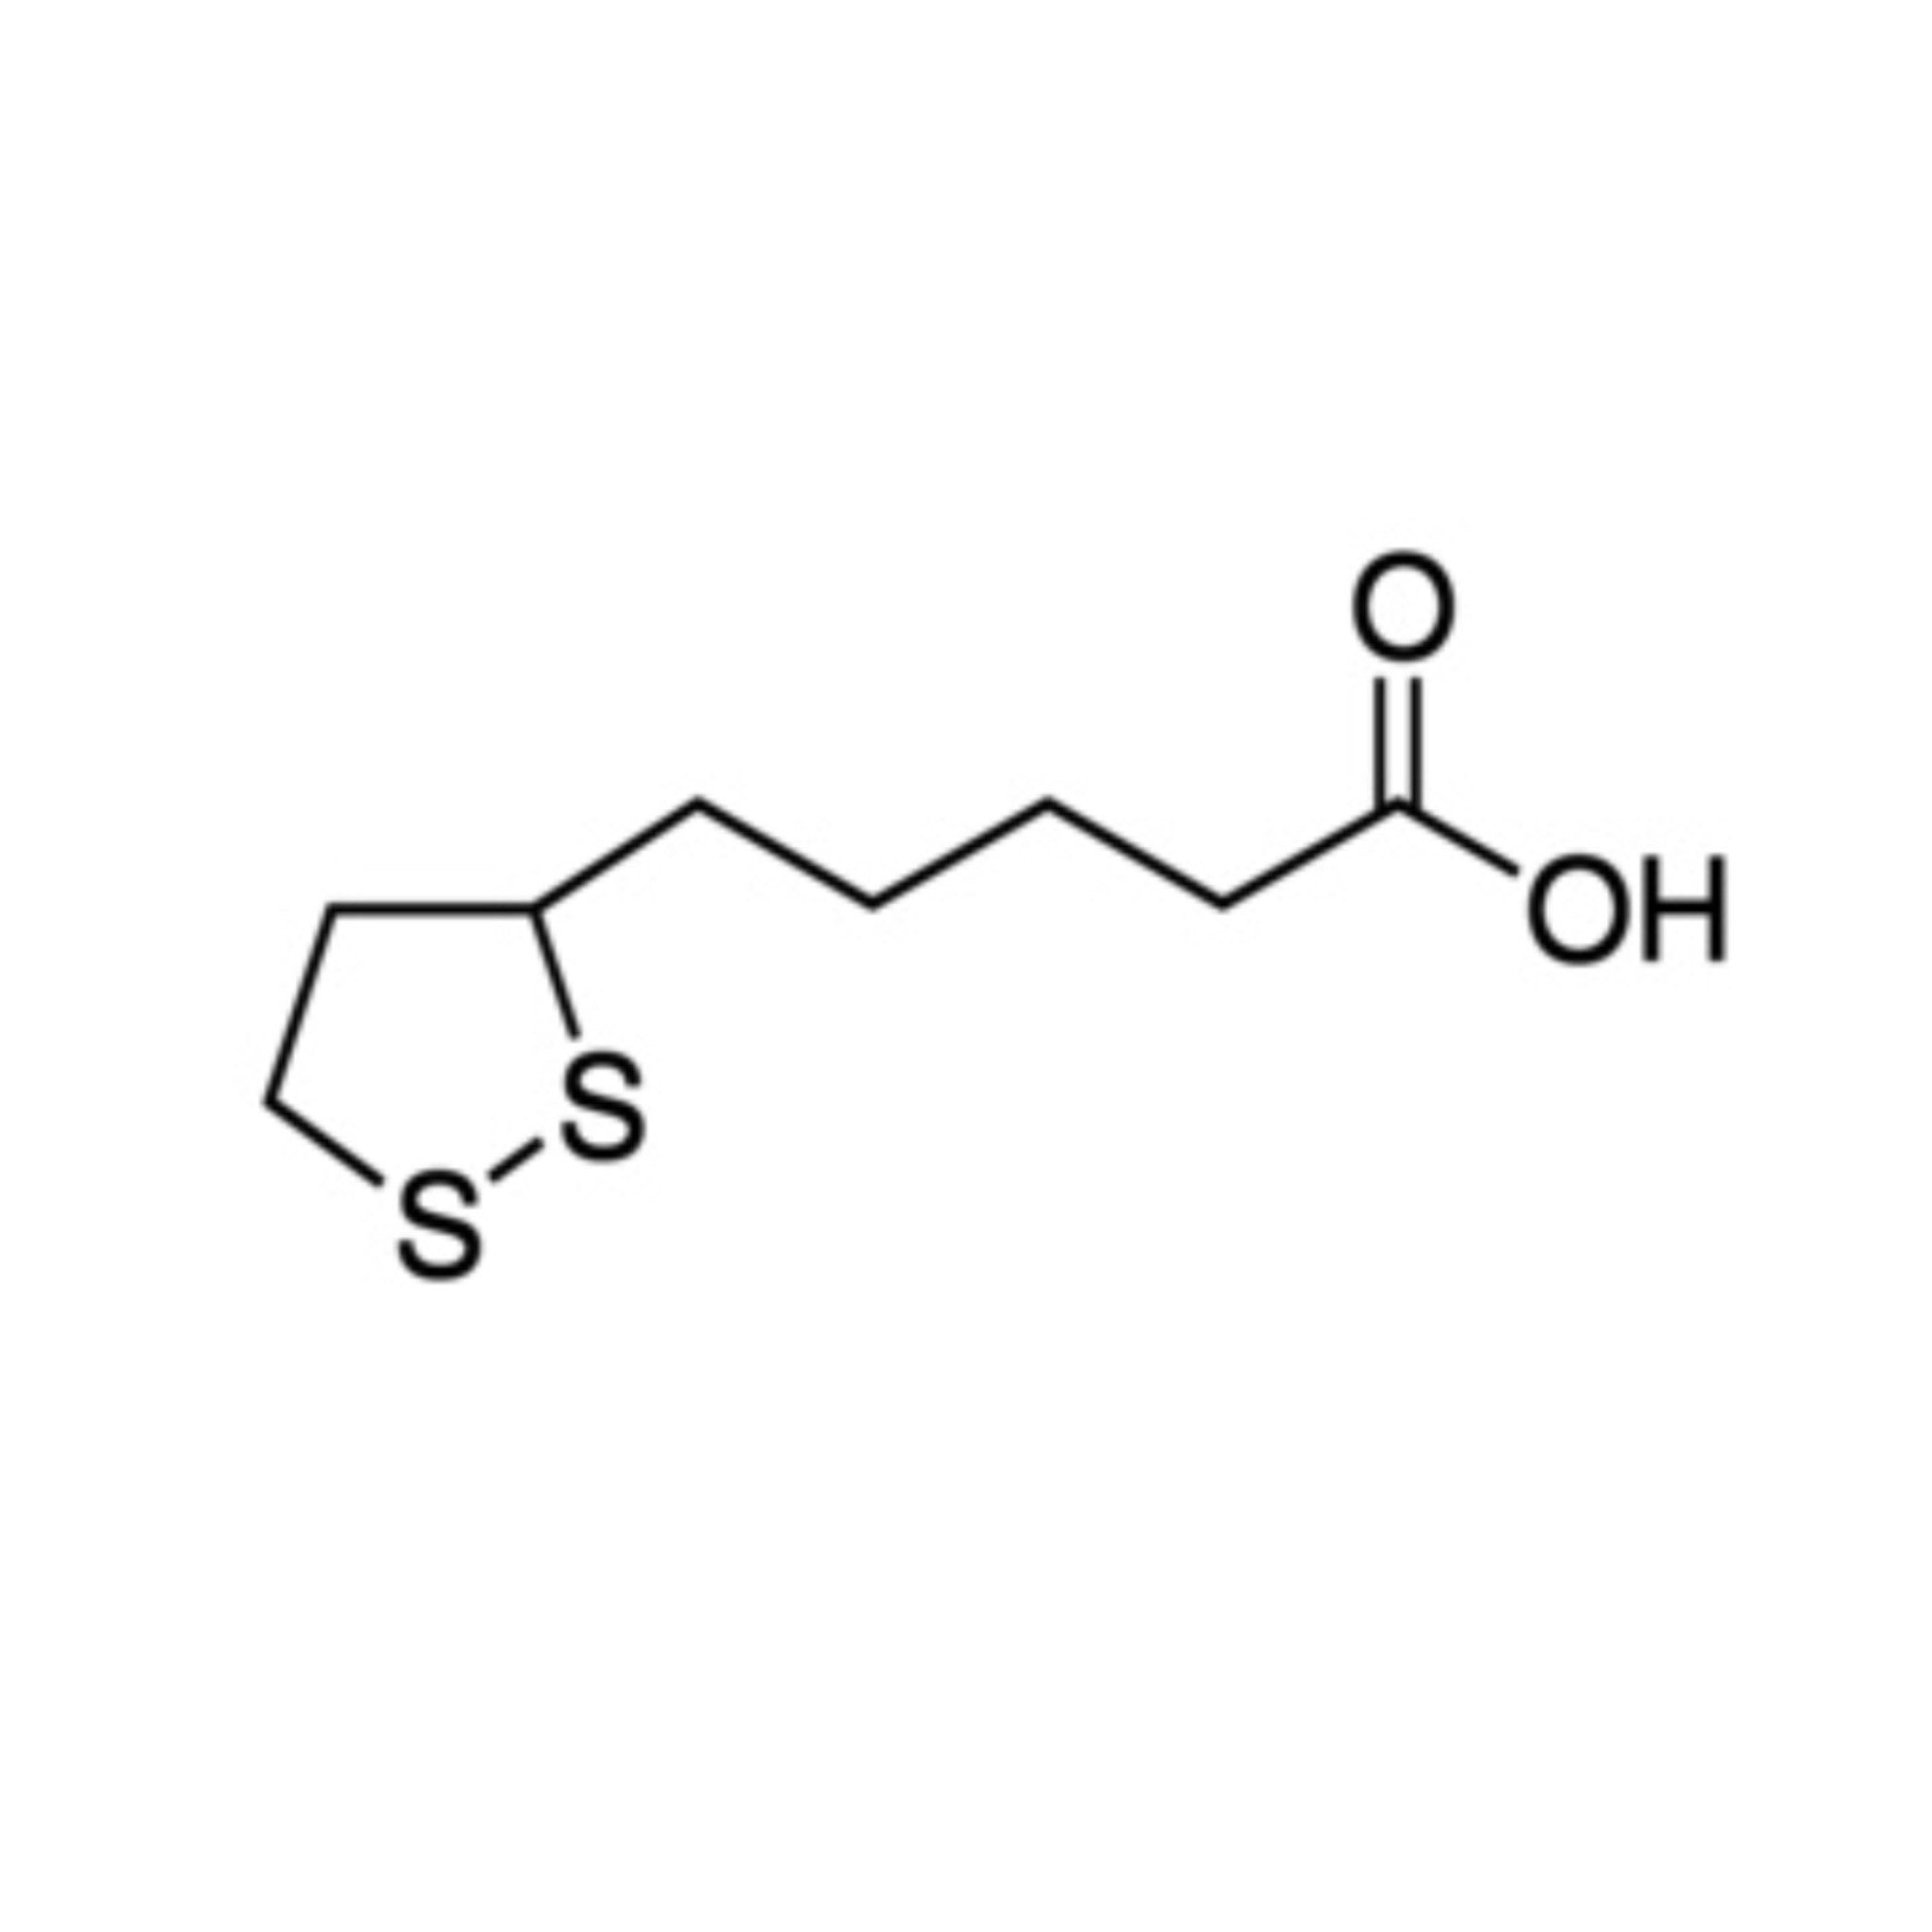 4 R-Alpha-Lipoic Acid - Maximum Daily Dosage 200mg - Four Ingredients